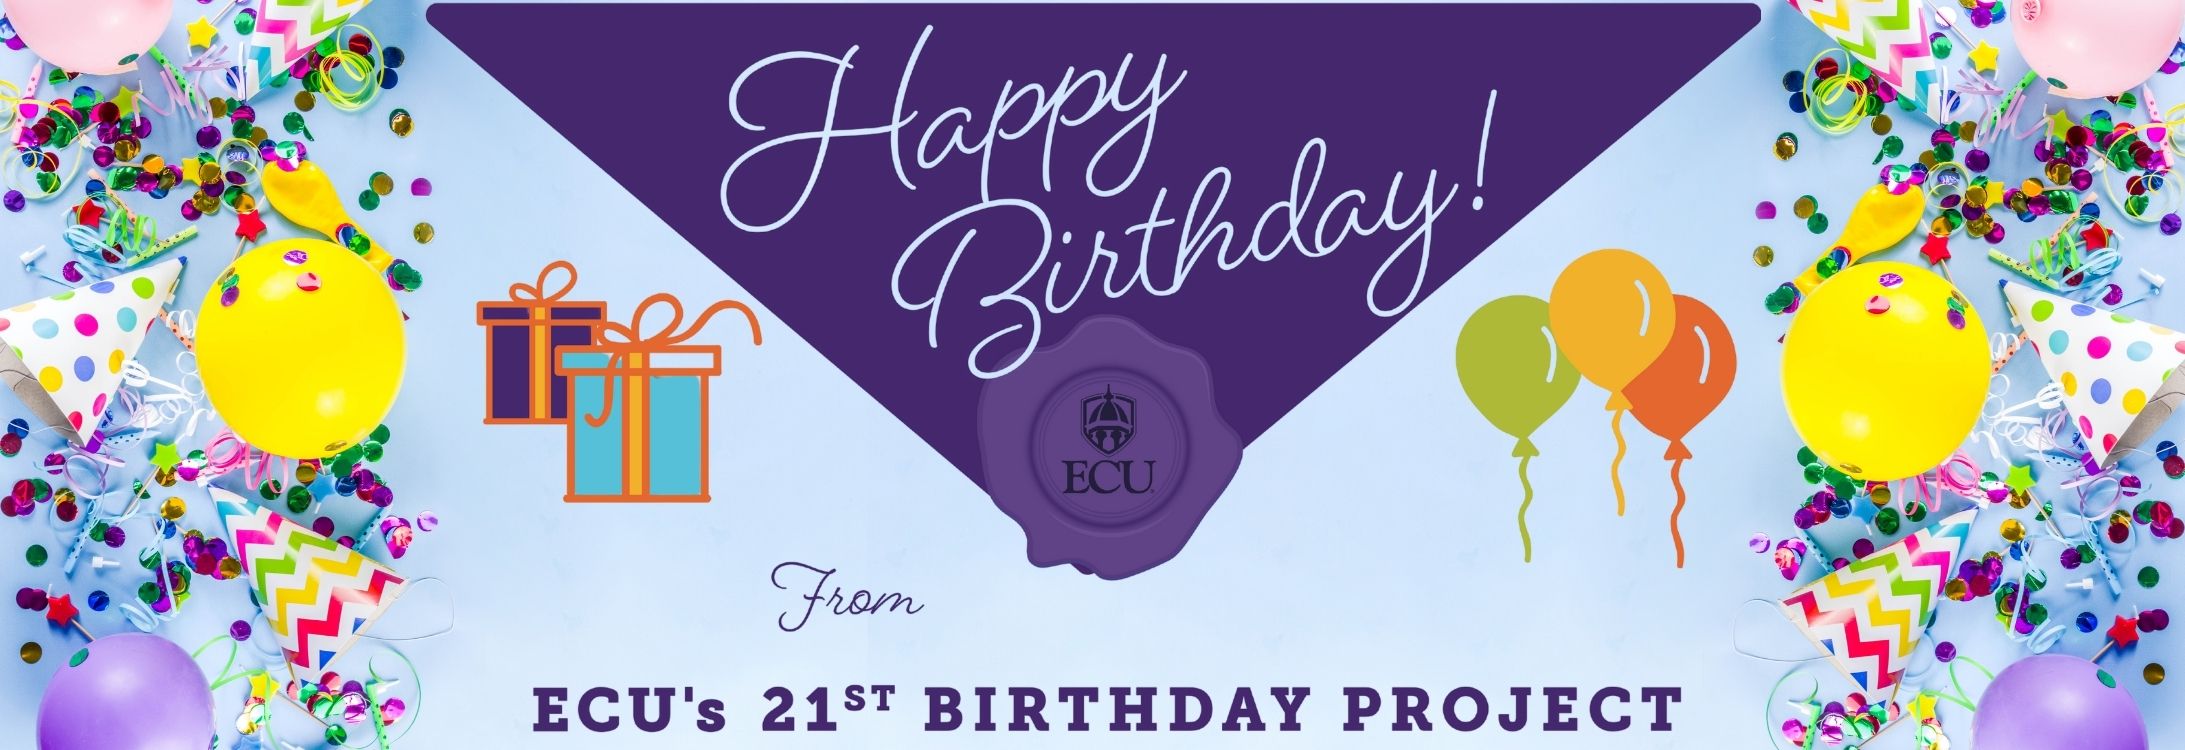 ECU 21st Birthday Project Envelope